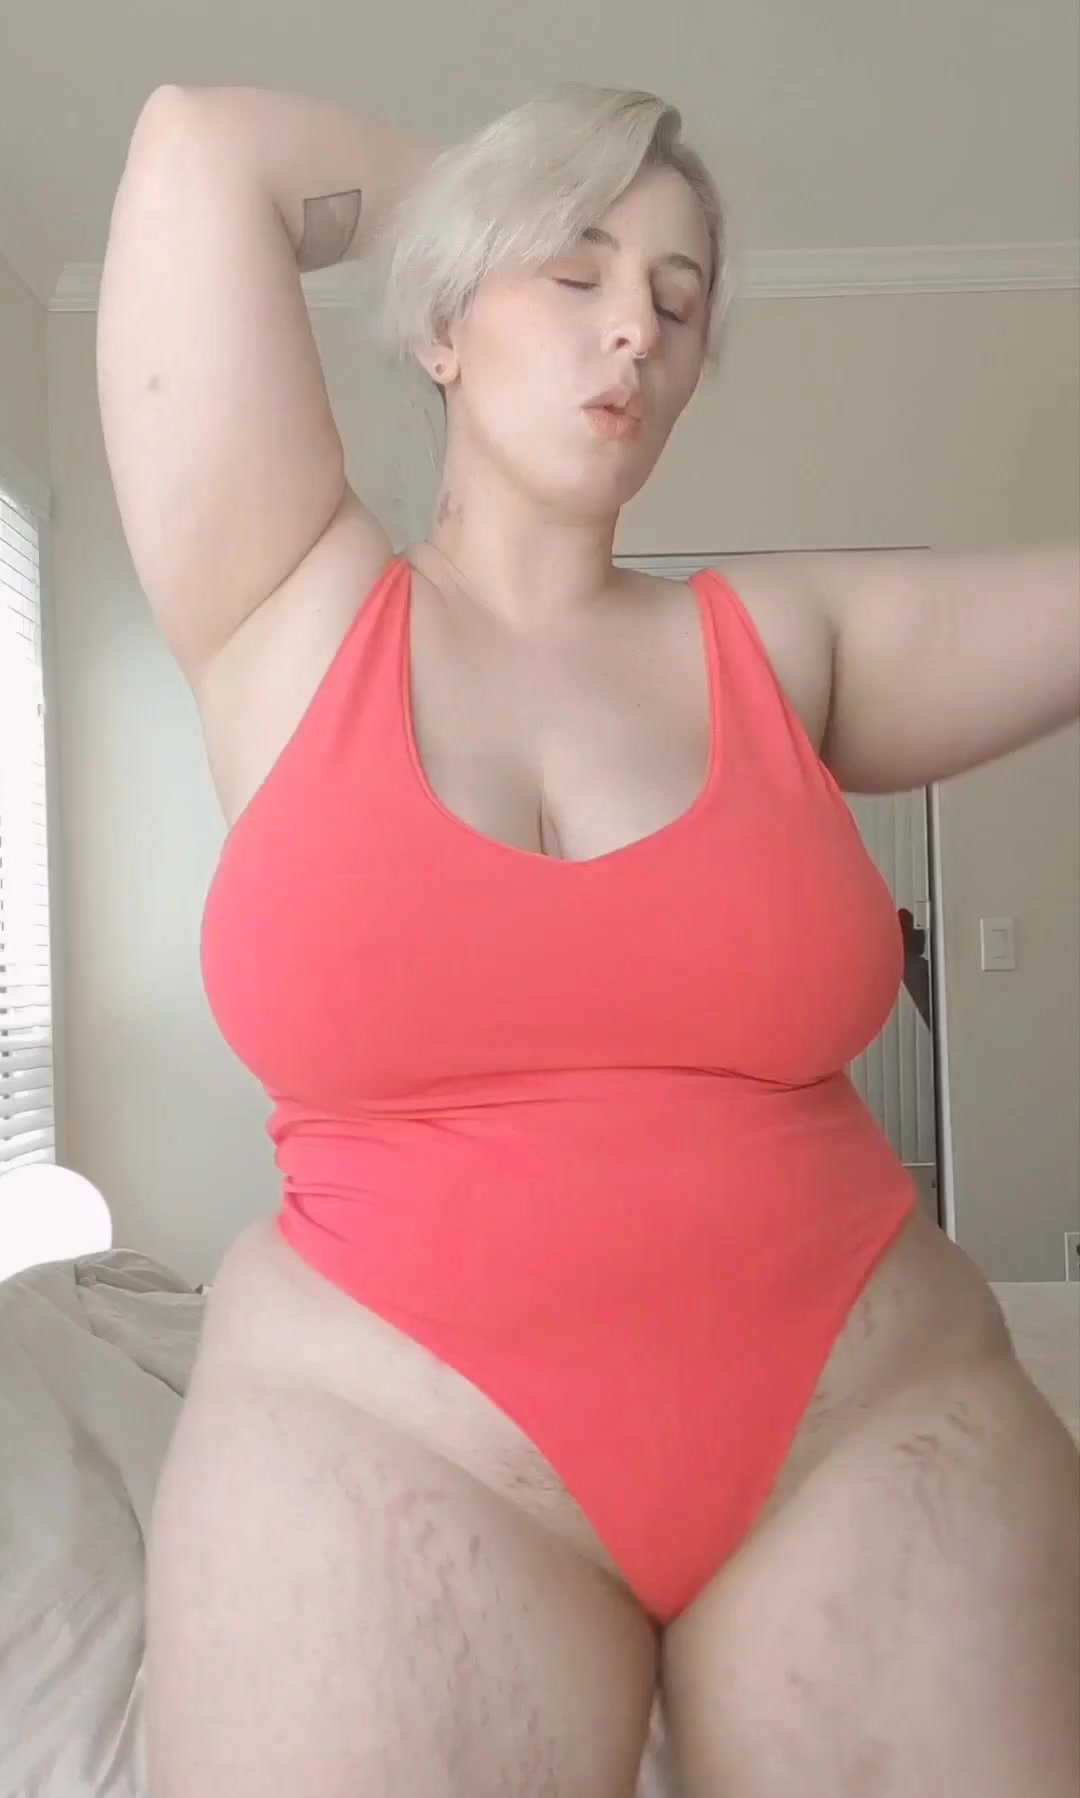 Bbw ssbbw: Sexy chubby slut - video 2 - ThisVid.com